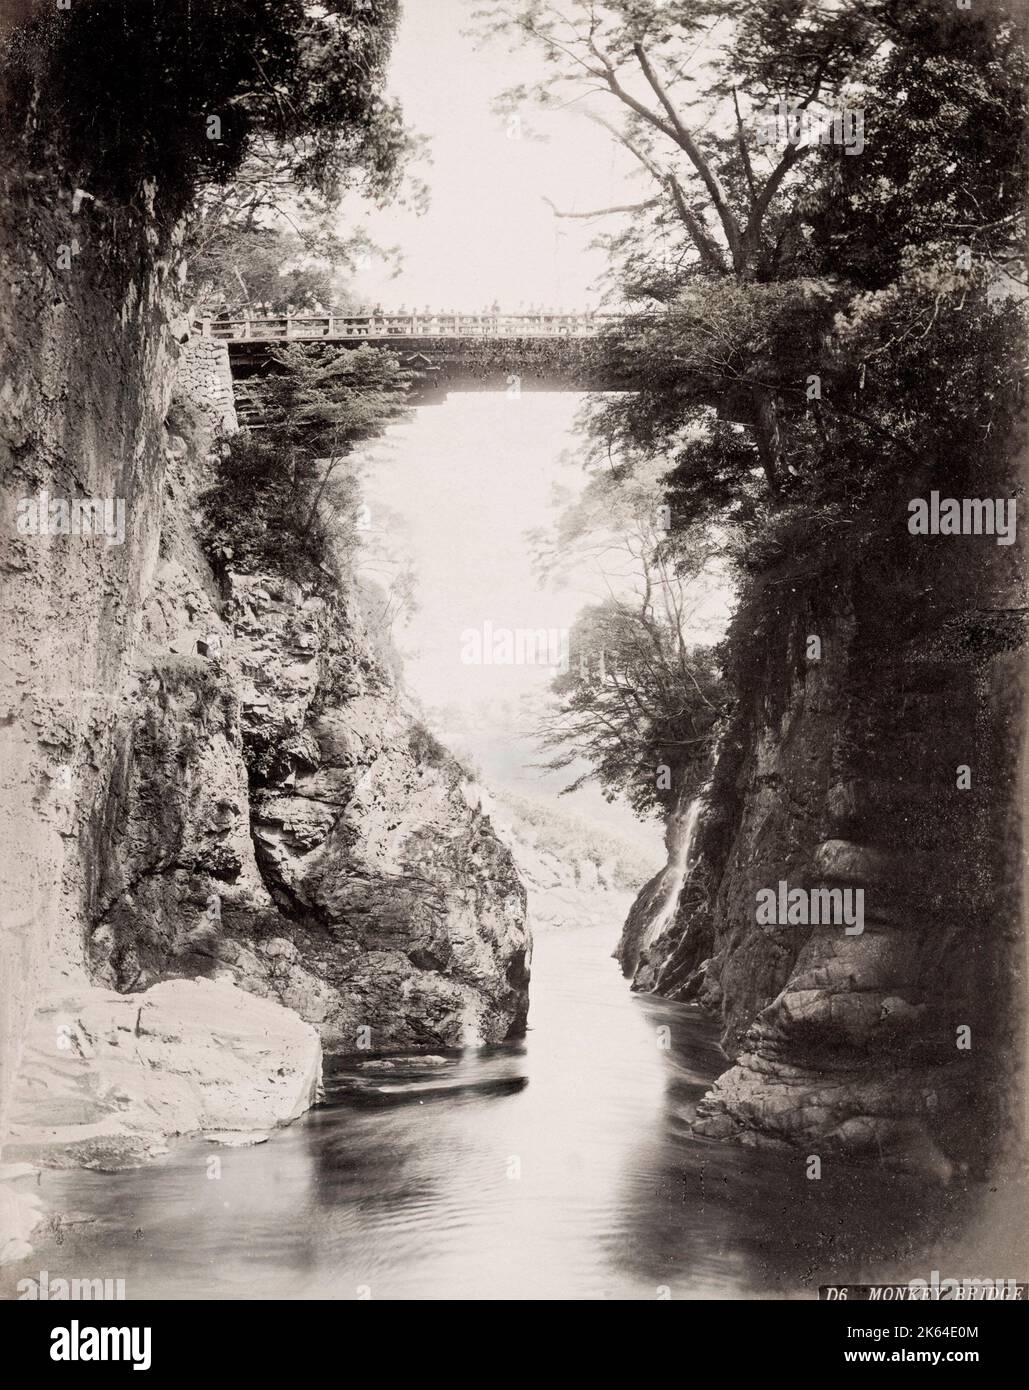 Vintage 19. Jahrhundert Foto: Monkey Bridge, hohe Holzbrücke über eine Schlucht, Japan. Stockfoto